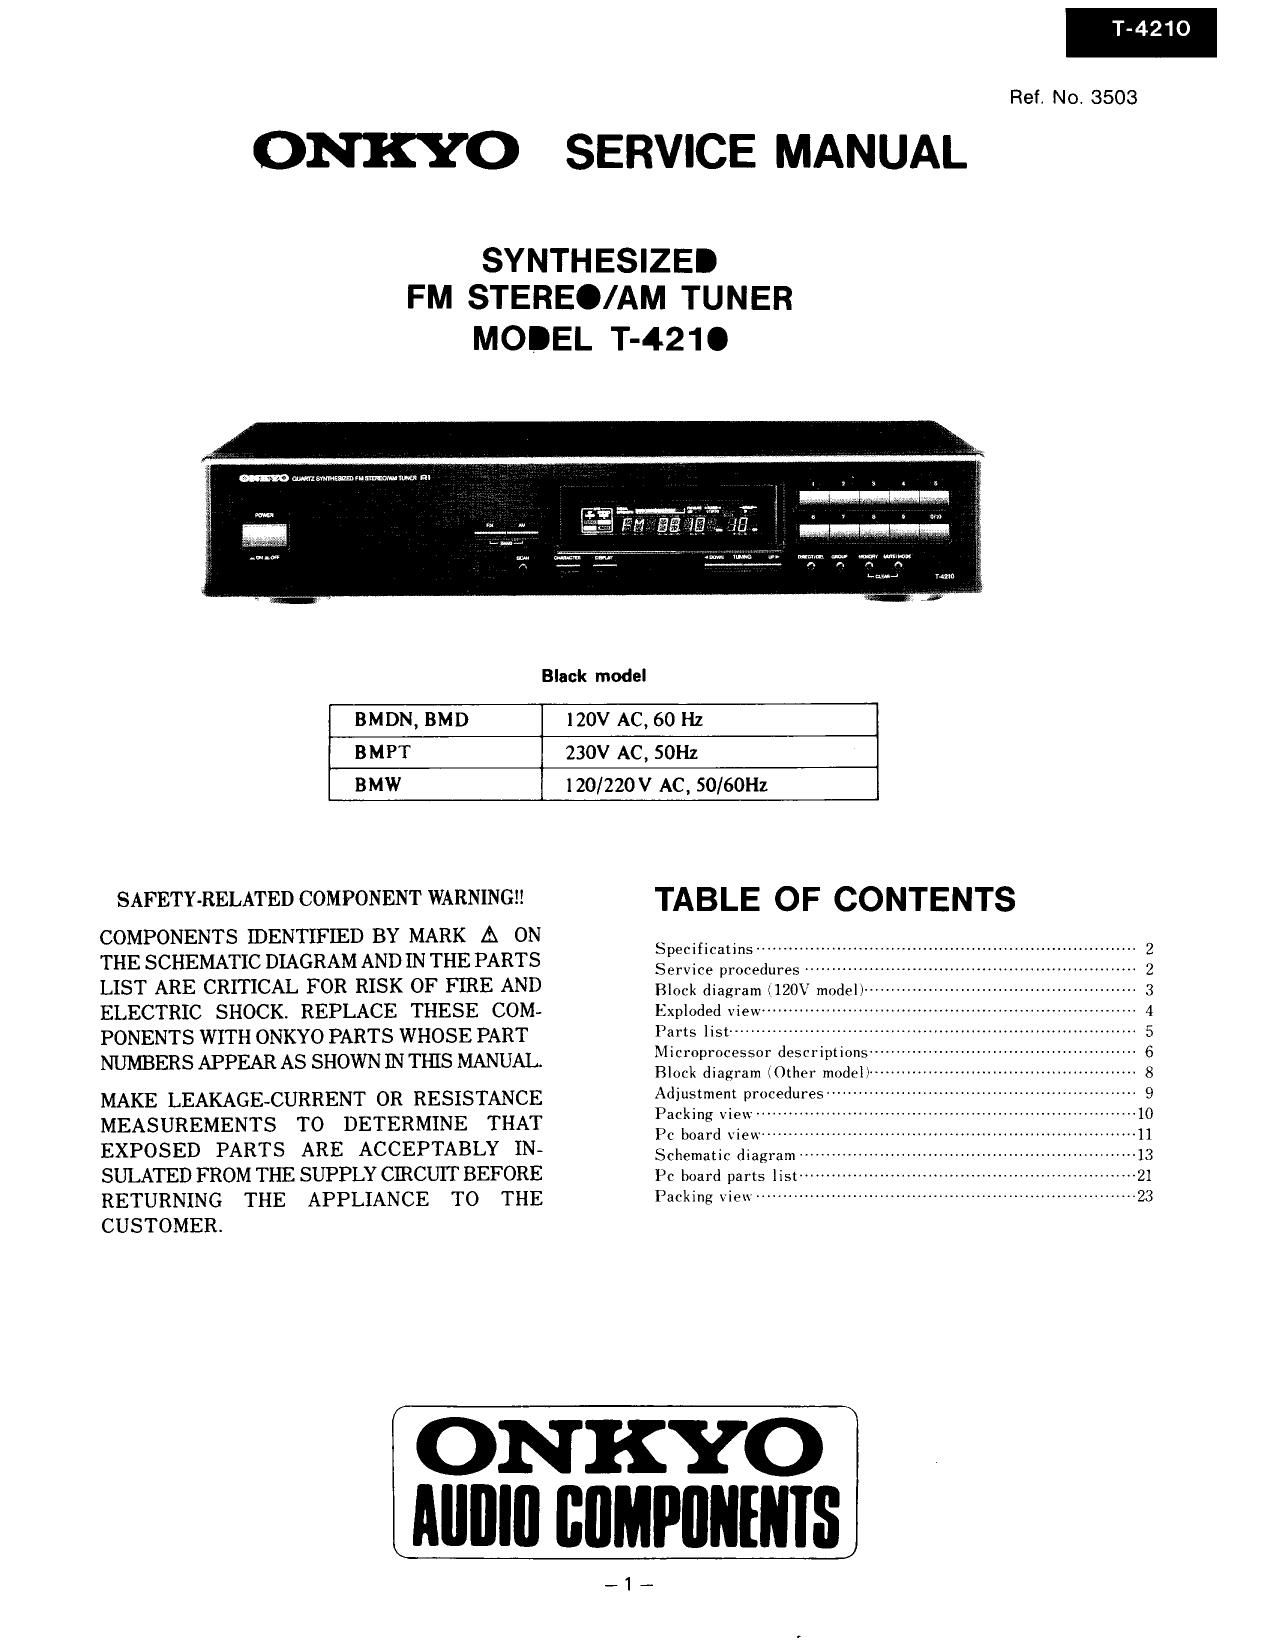 Onkyo T 4210 Service Manual